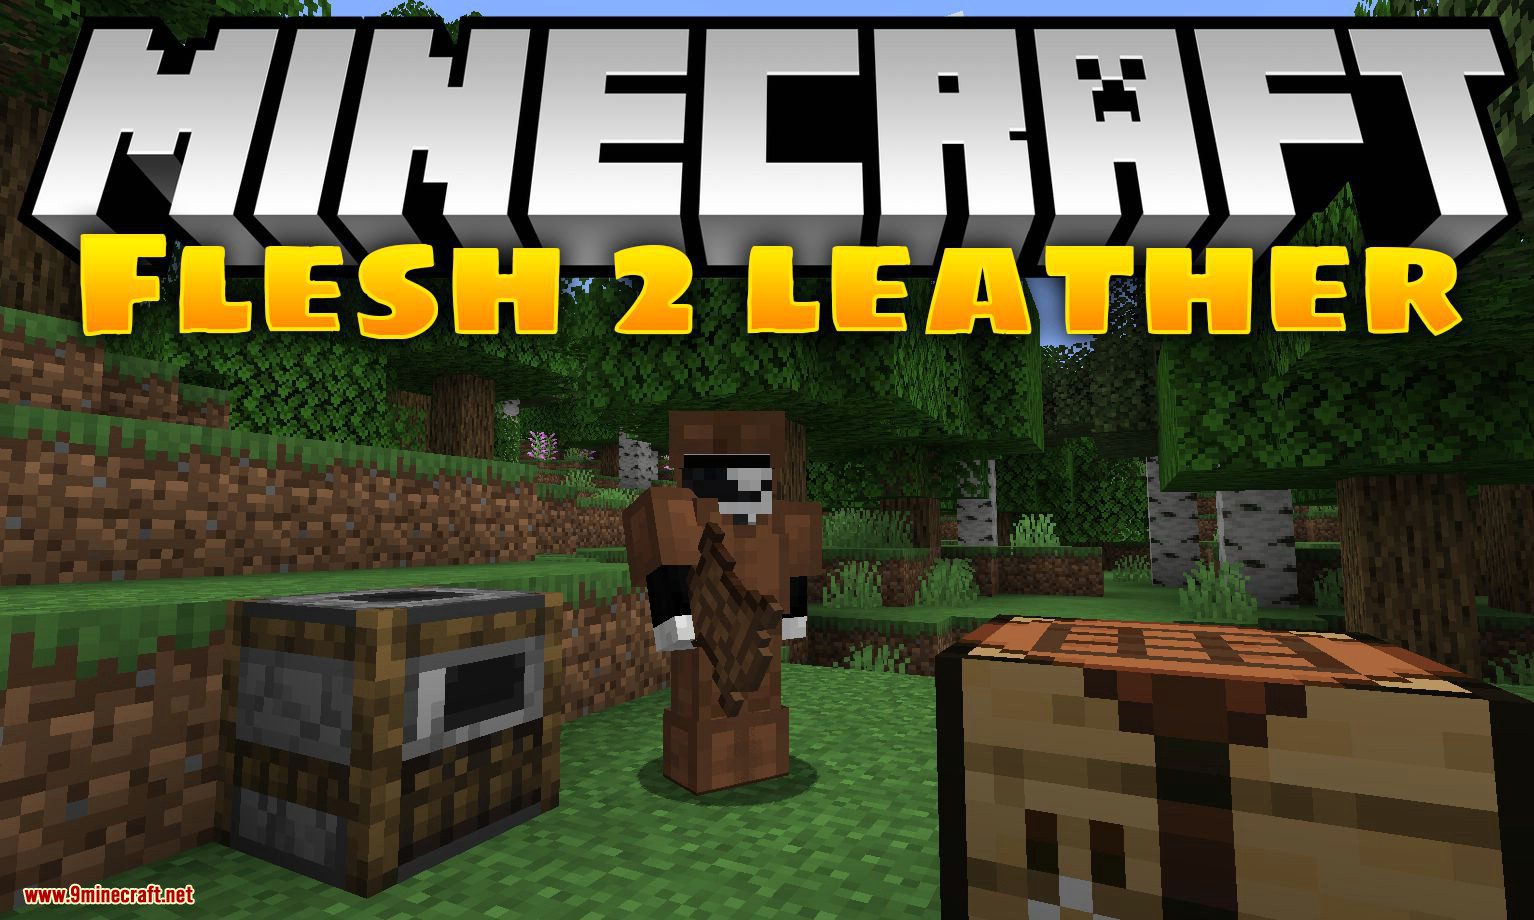 Flesh 2 Leather mod for minecraft logo